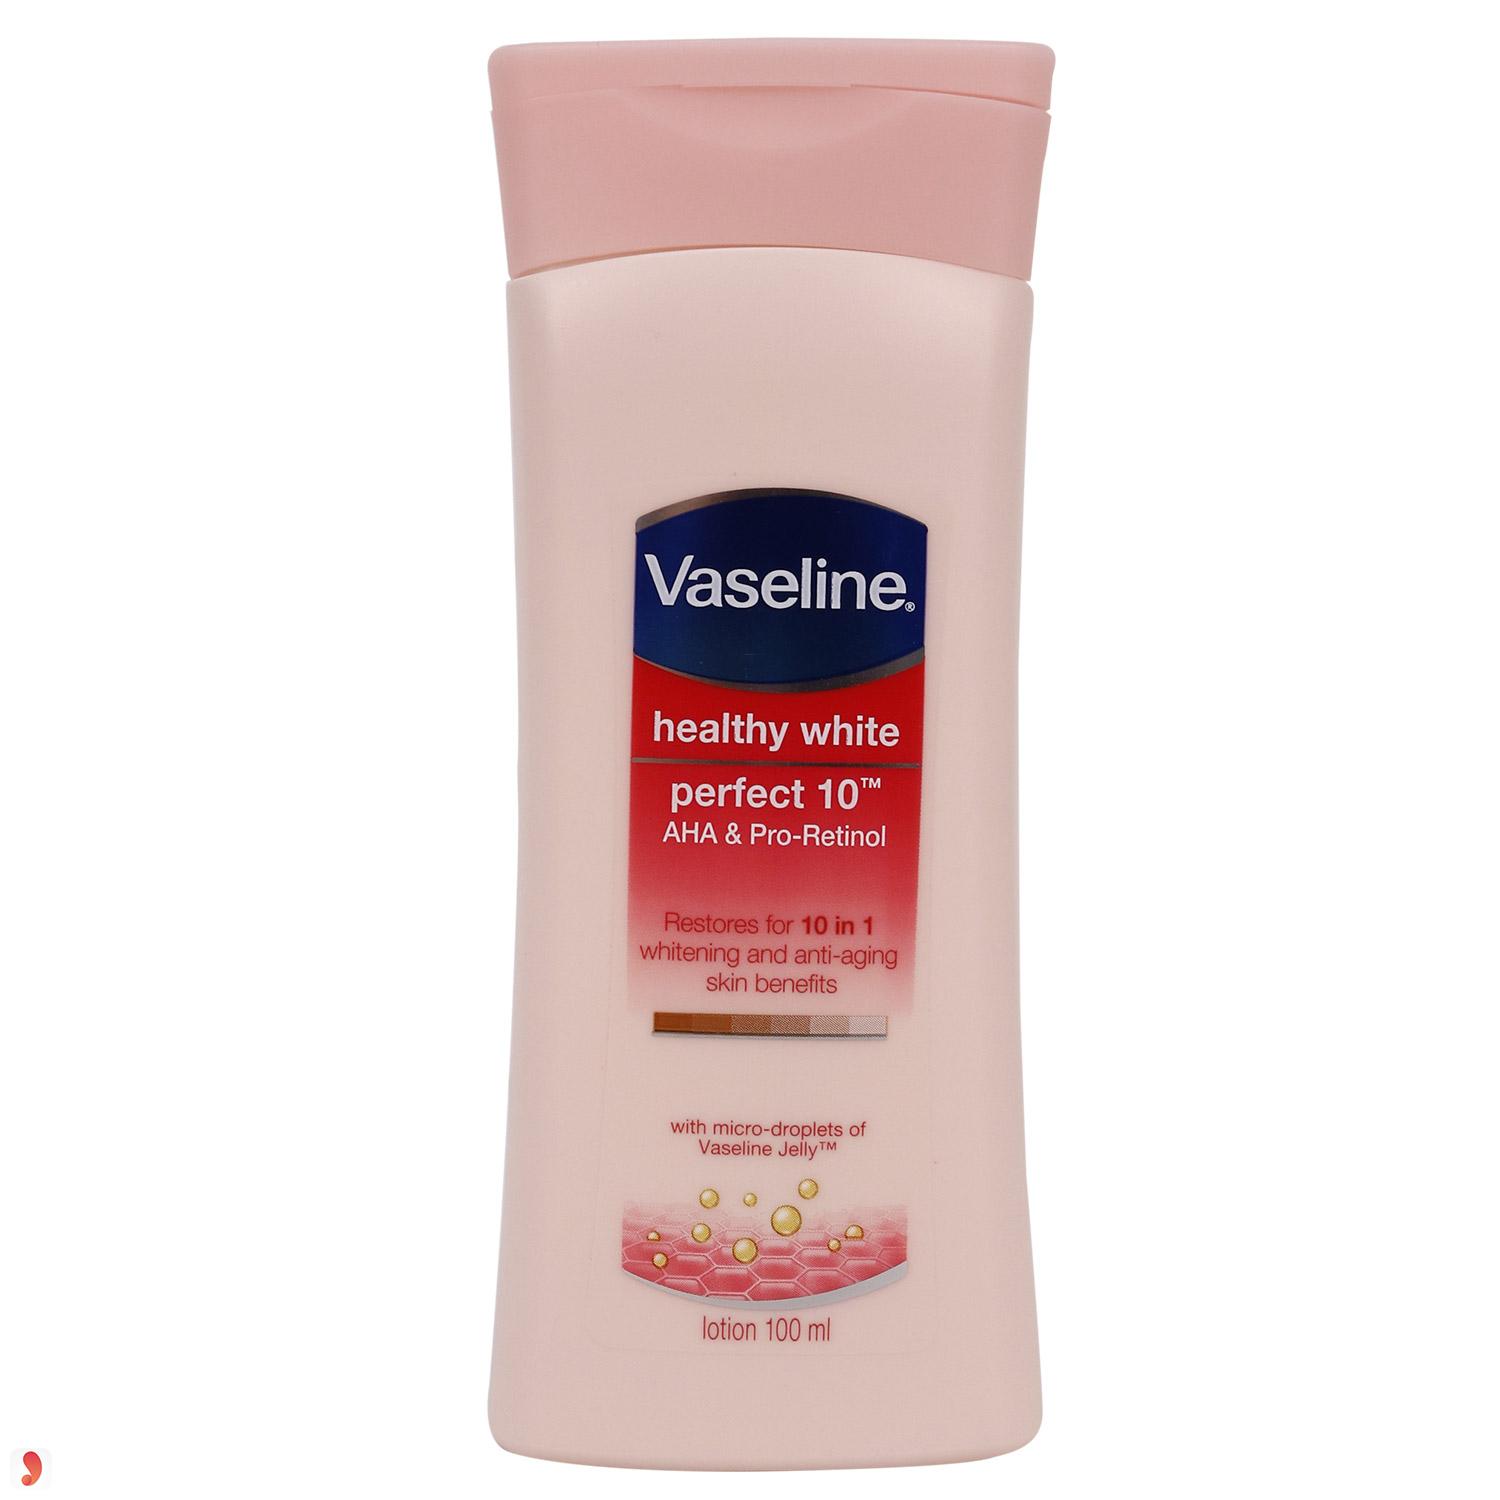 Vaseline healthy white Perfect 10 